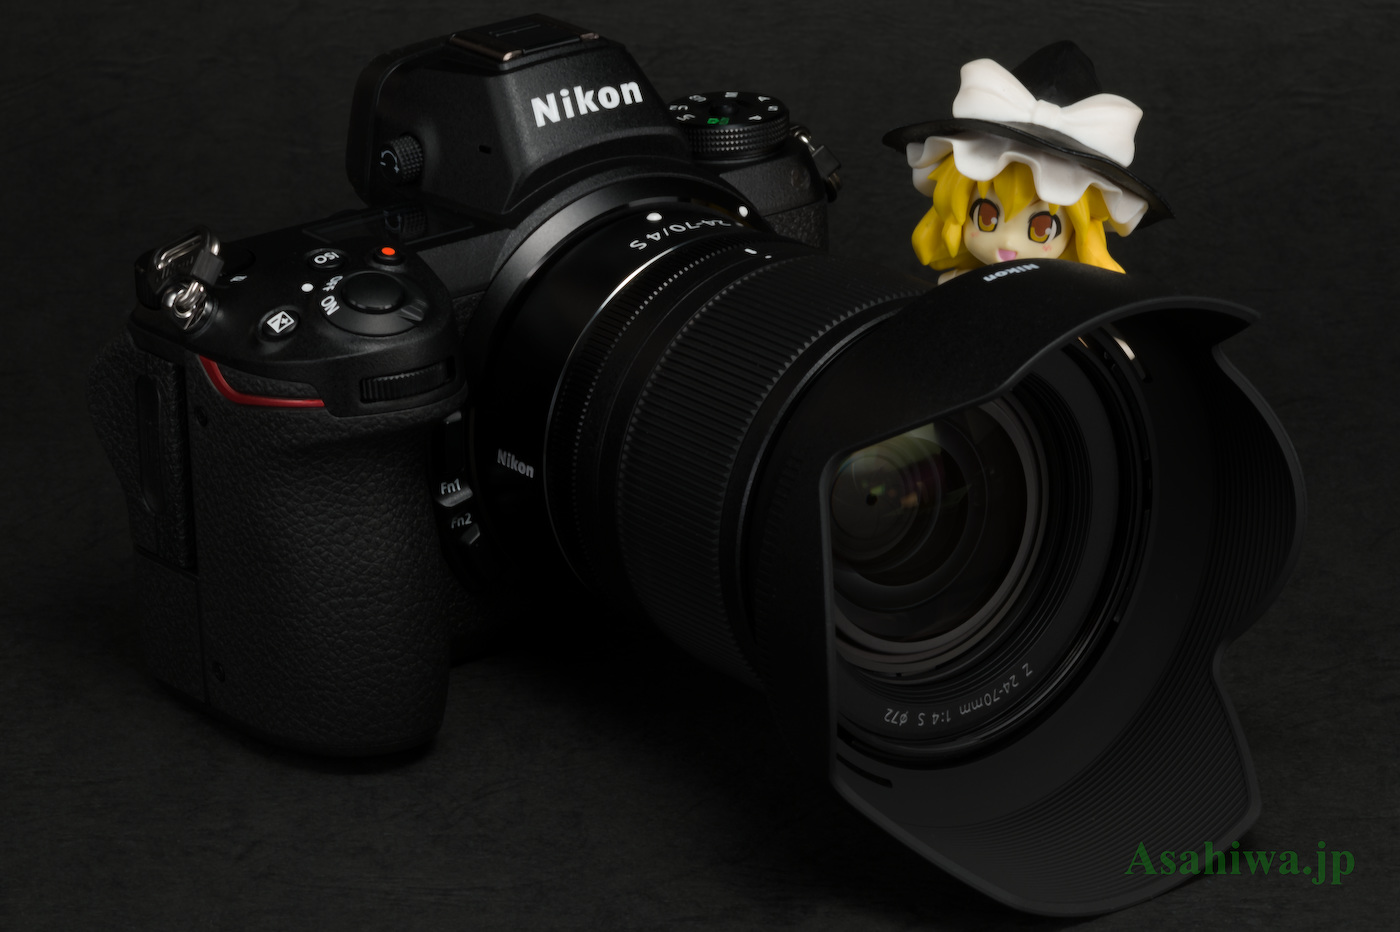 Nikon NIKKOR Z 24-70mm f/4 Sカメラ・レンズレビュー機材よろずなホビー